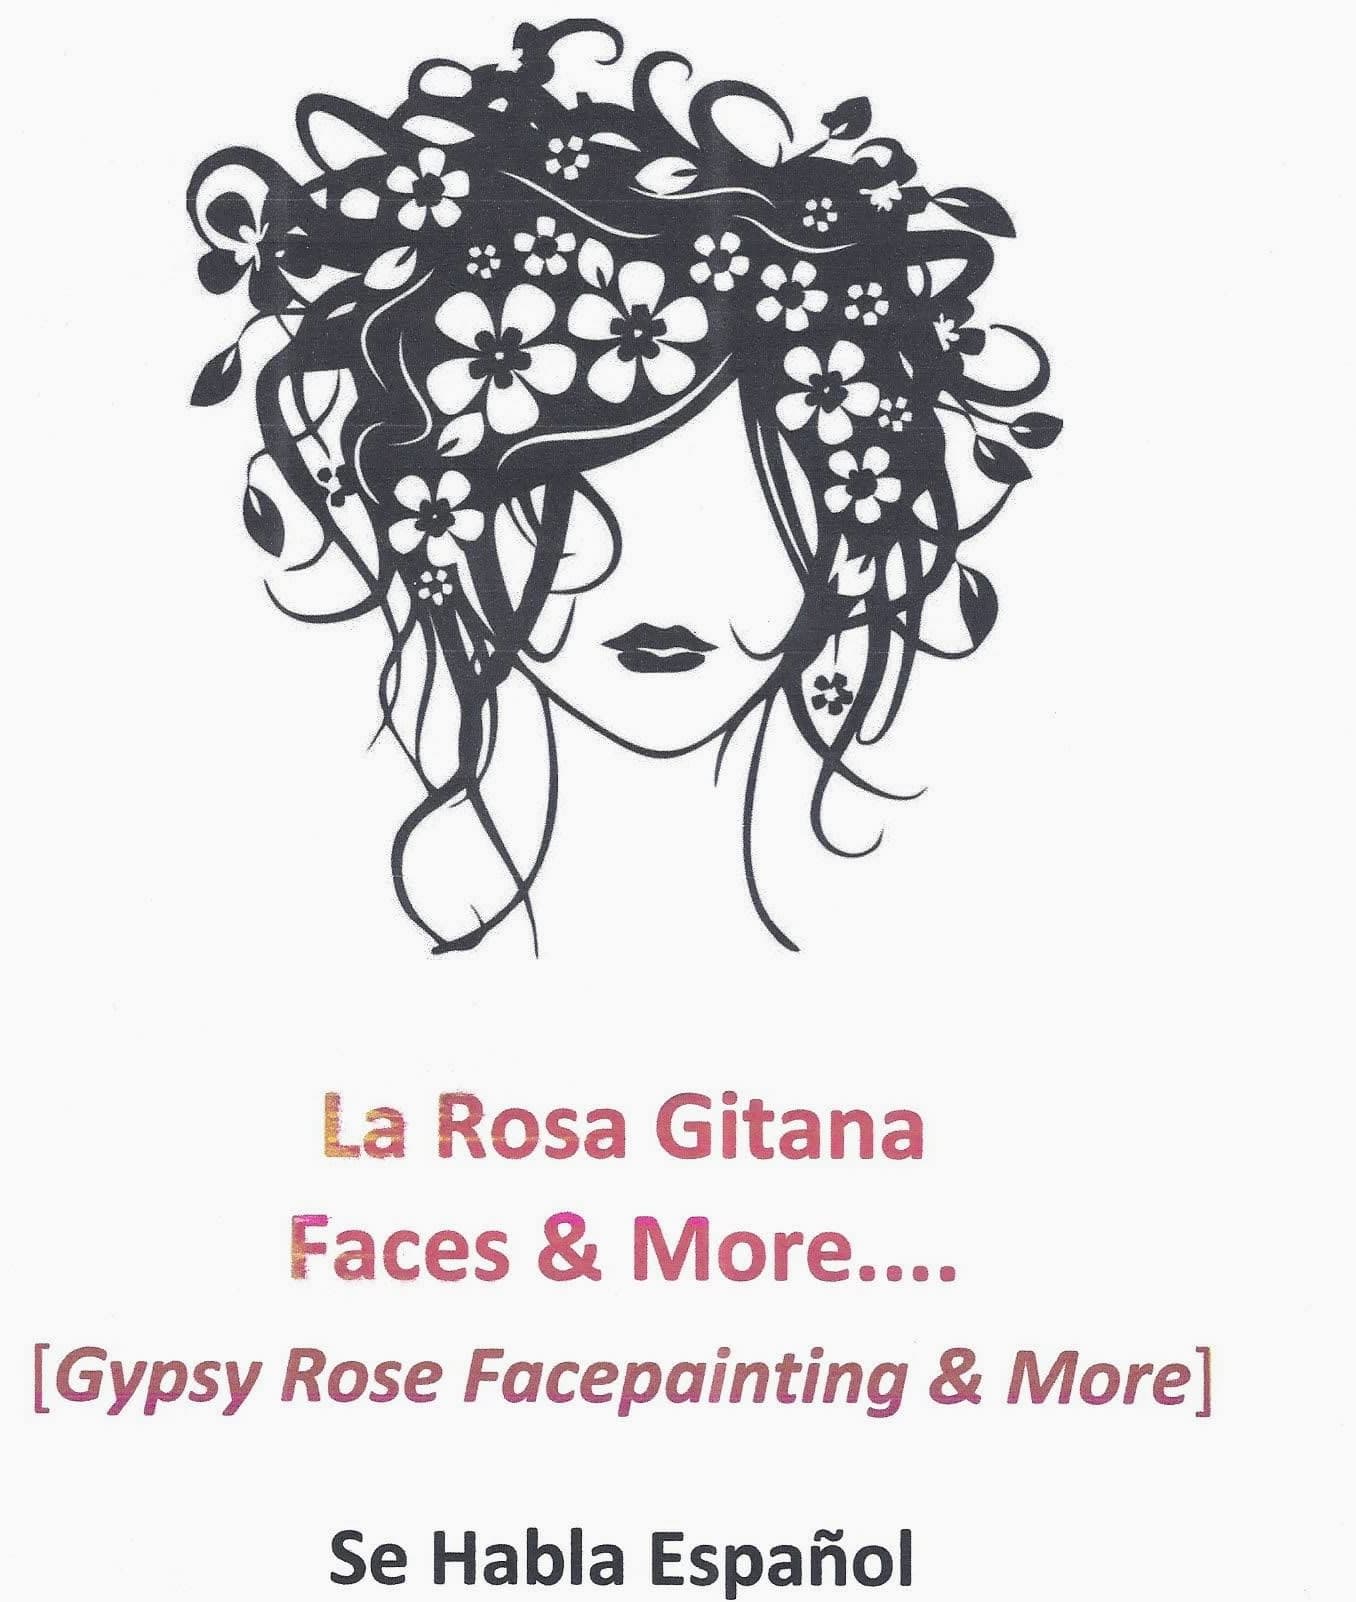 La Rosa Gitana Faces, Party Hosting & More